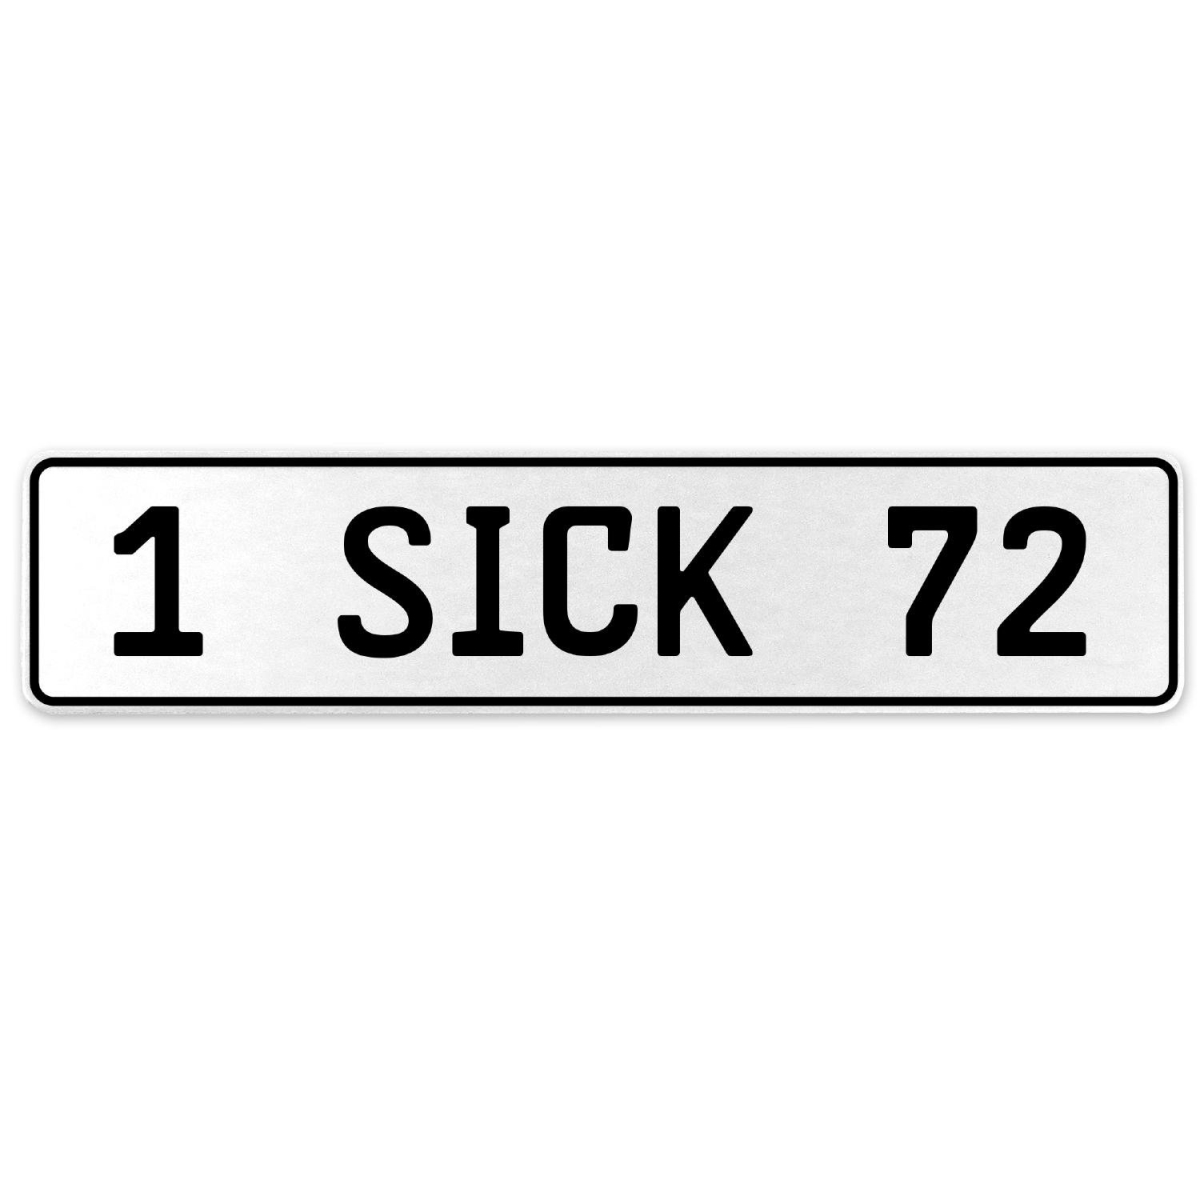 554471 1 Sick 72 - White Aluminum Street Sign Mancave Euro Plate Name Door Sign Wall